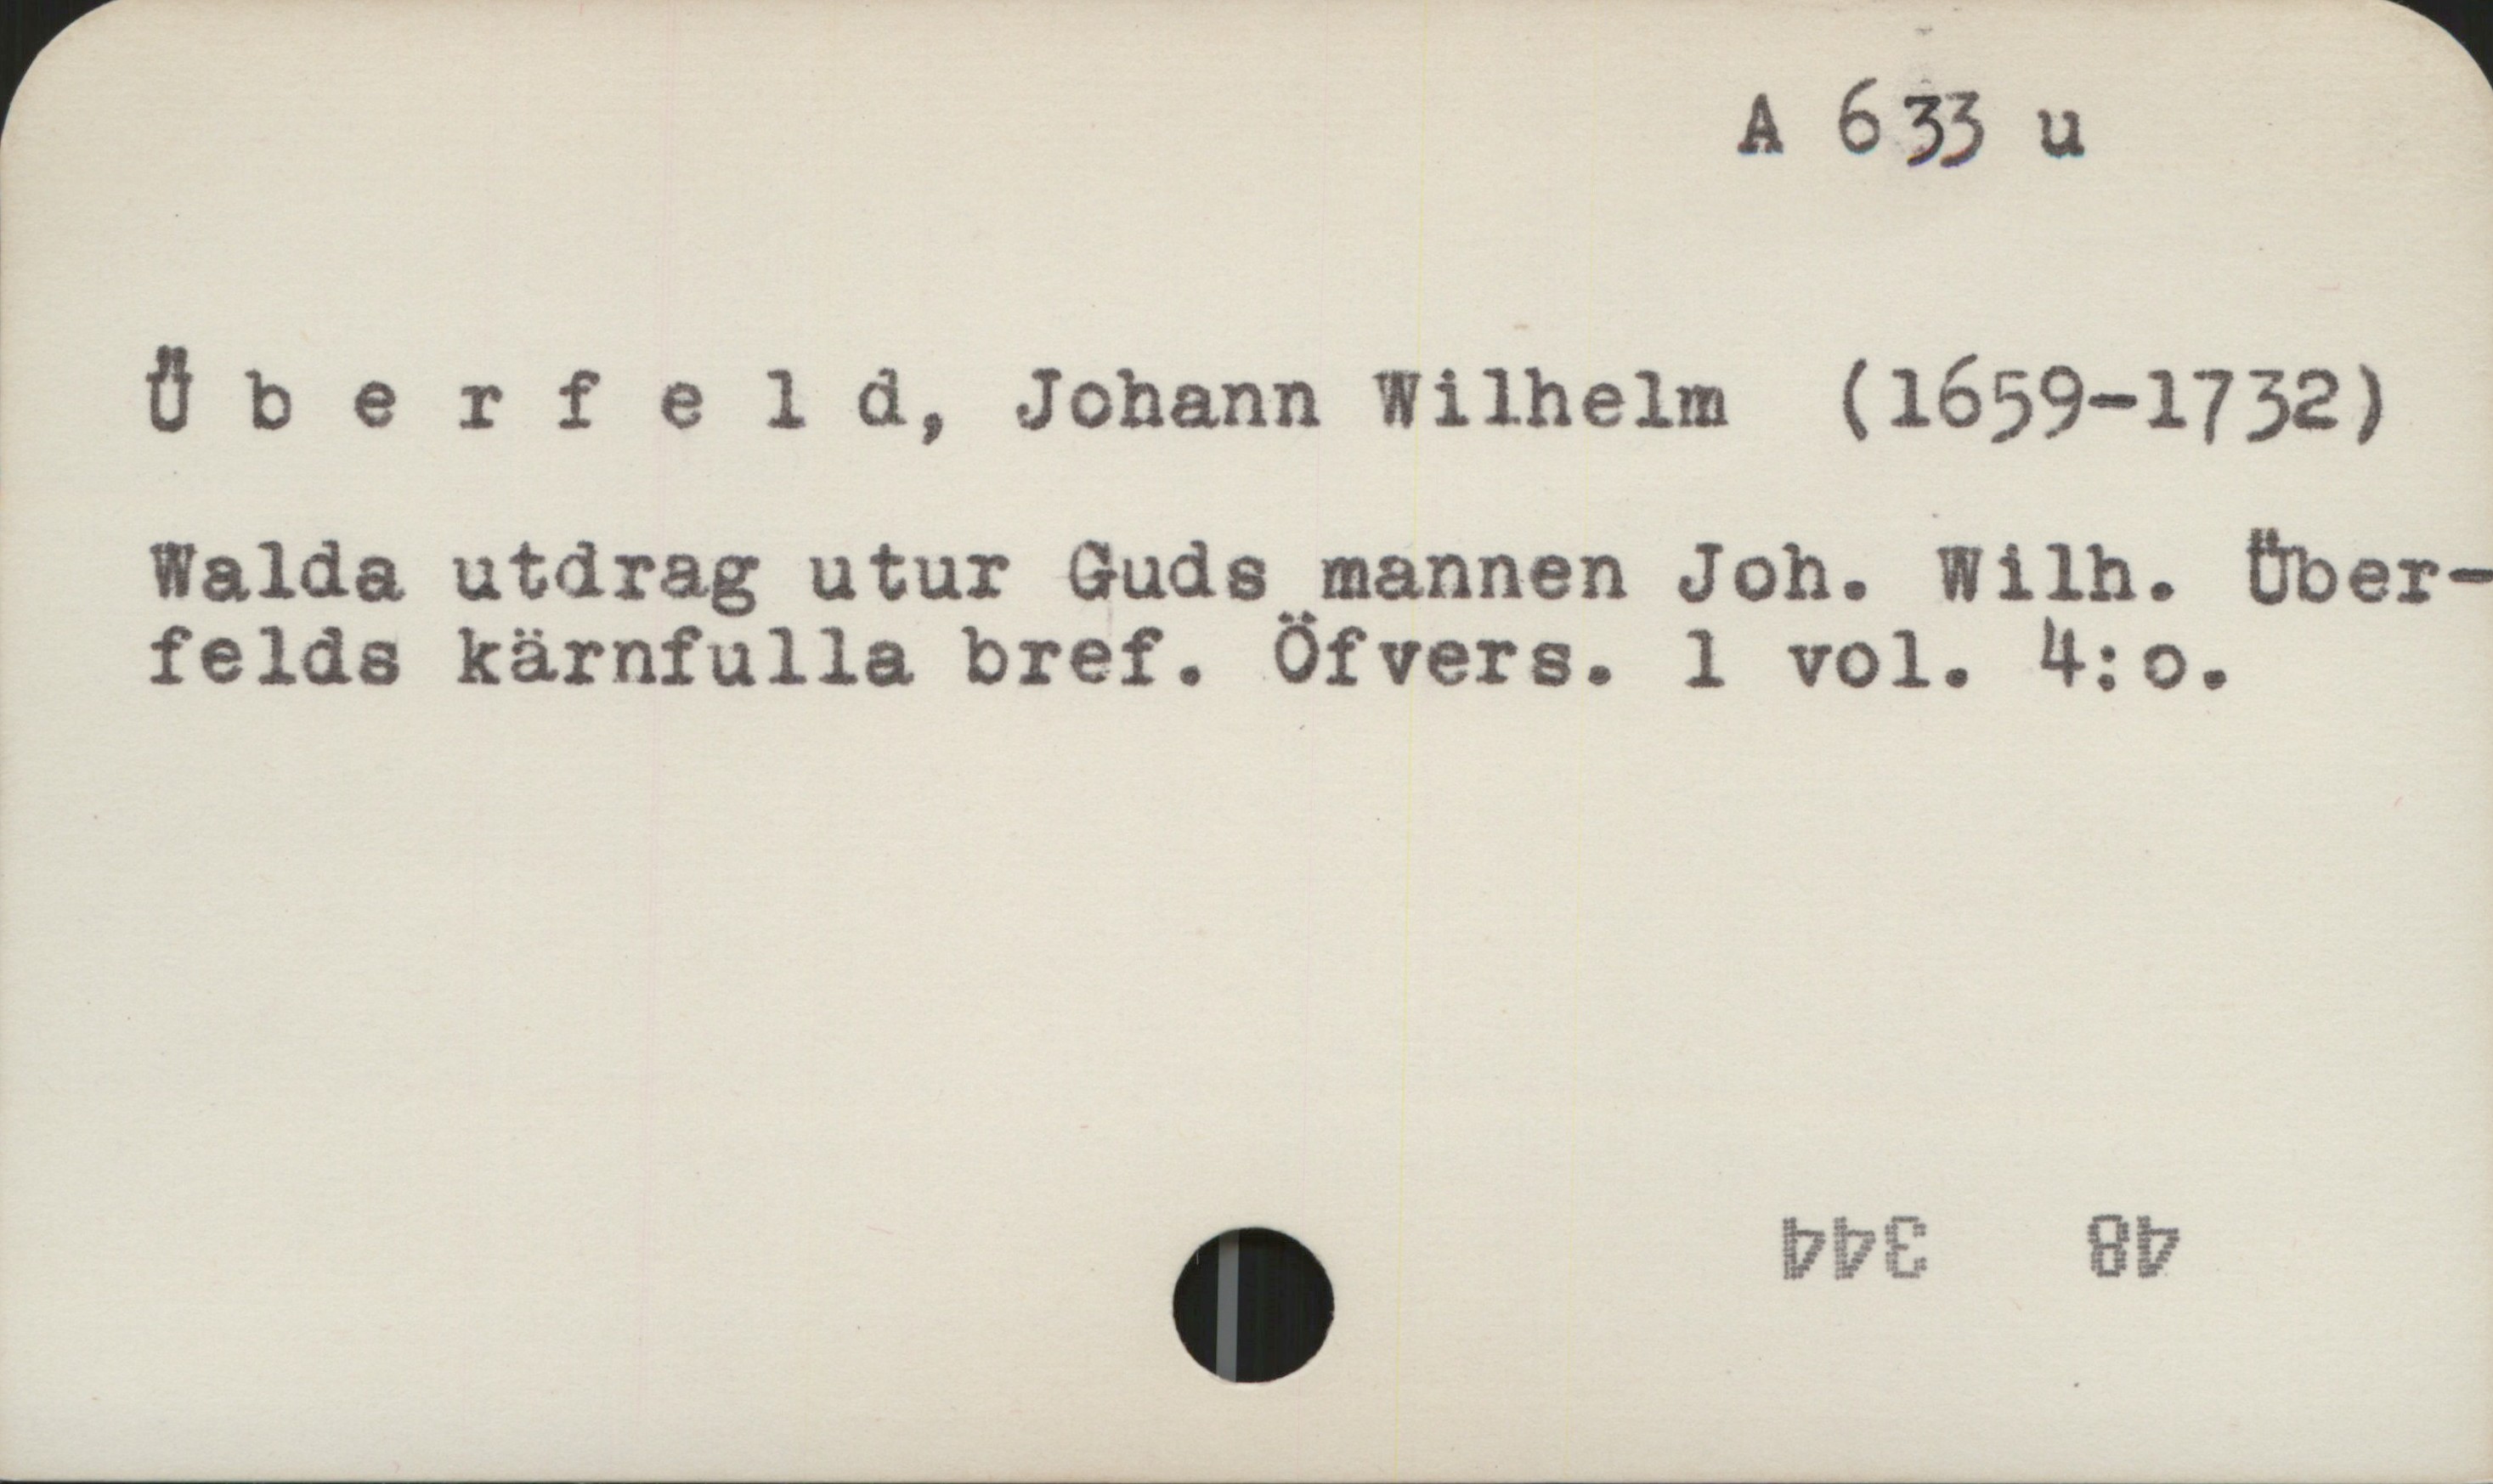 Überfeld, Johann Wilhelm (1659-1732) A 633 u
Überfeld, Johann Wilhelm (1659-1732)
Walda utdrag utur Guds mannen Joh. Wilh. Üvber-
felds kärnfulla bref. öfvers. 1 vol. 4:o.